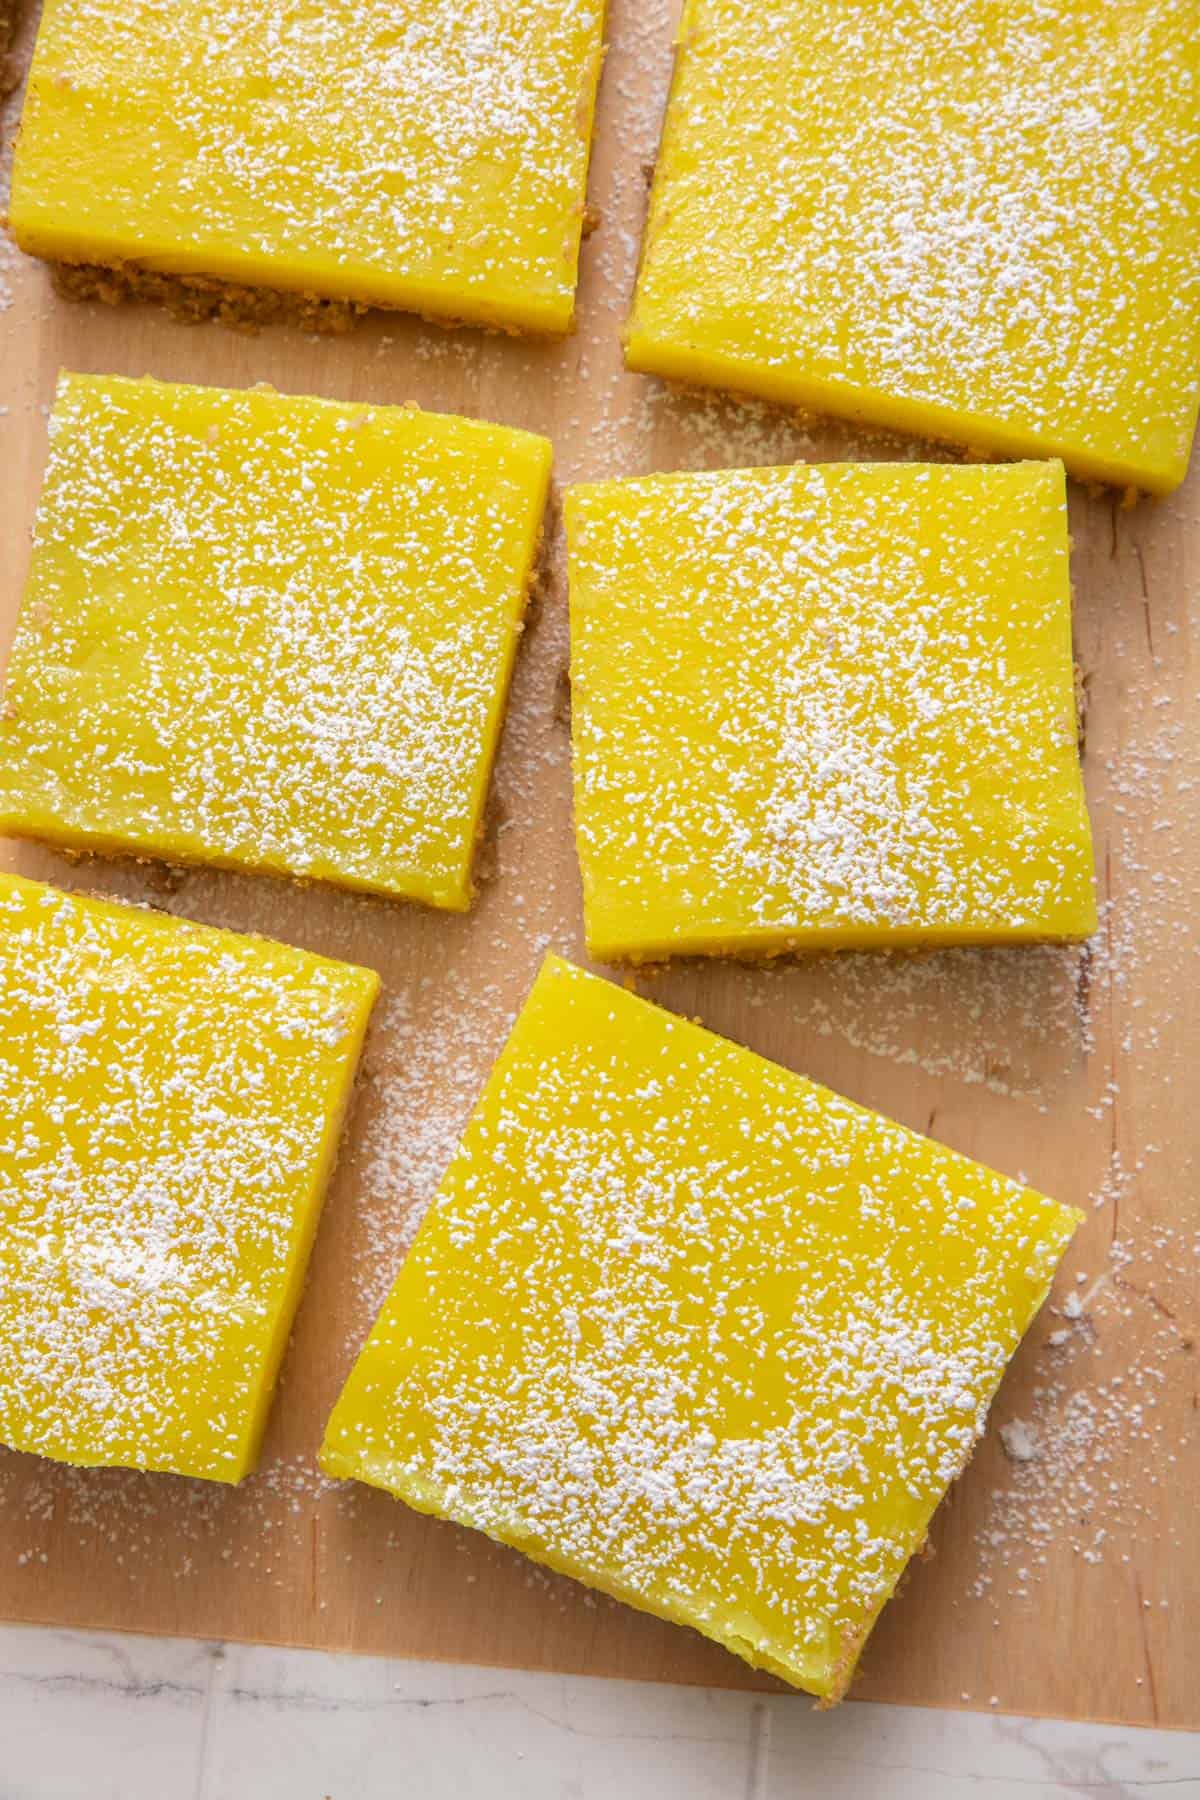 Sliced vegan lemon bars dusted with powdered sugar on cutting board